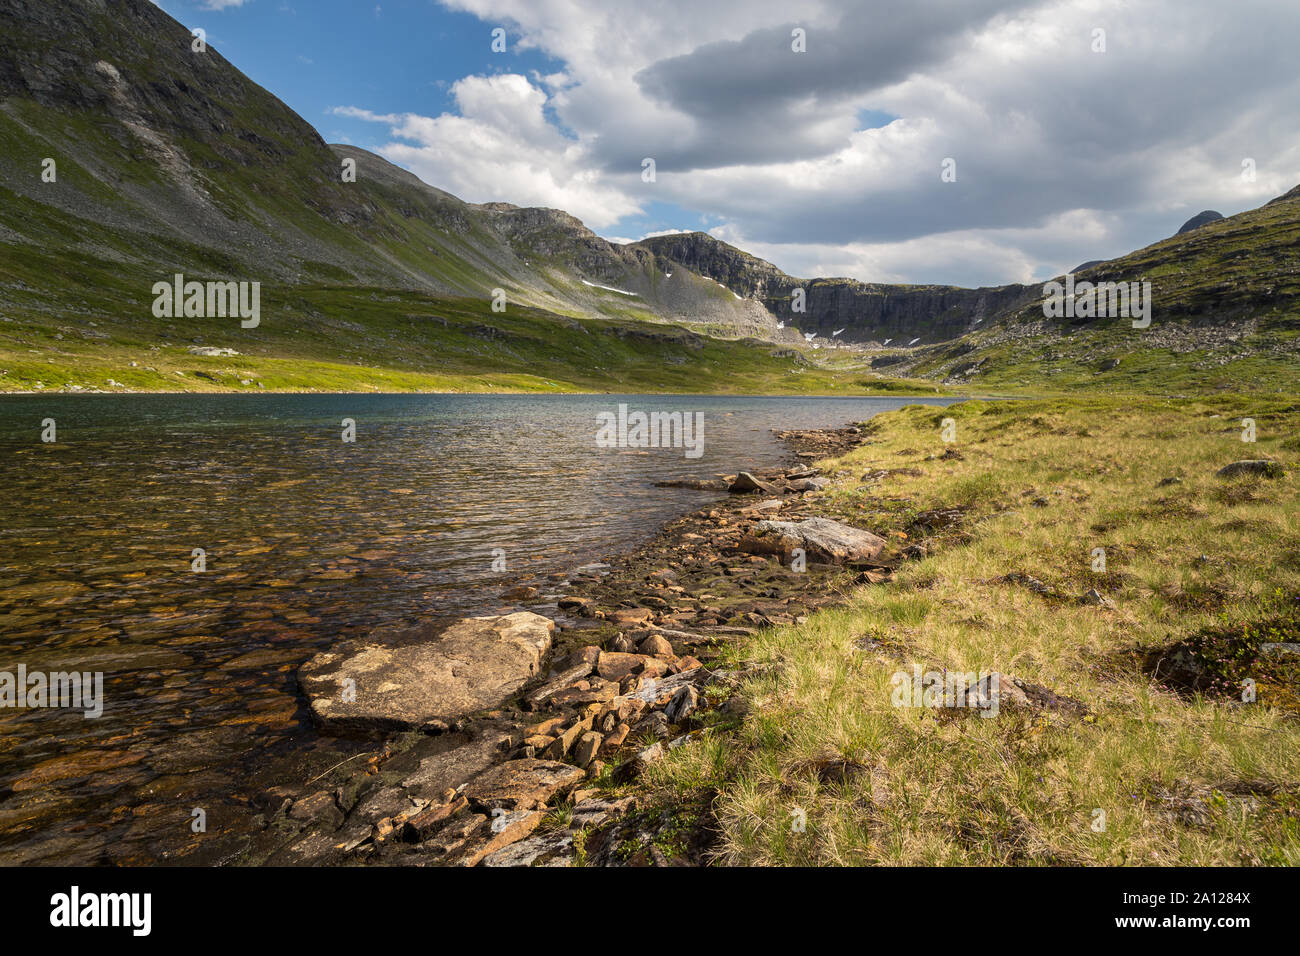 Vista dalla valle Renndalen Trollheimen in montagna, norvegese national park, l'estate. Foto Stock